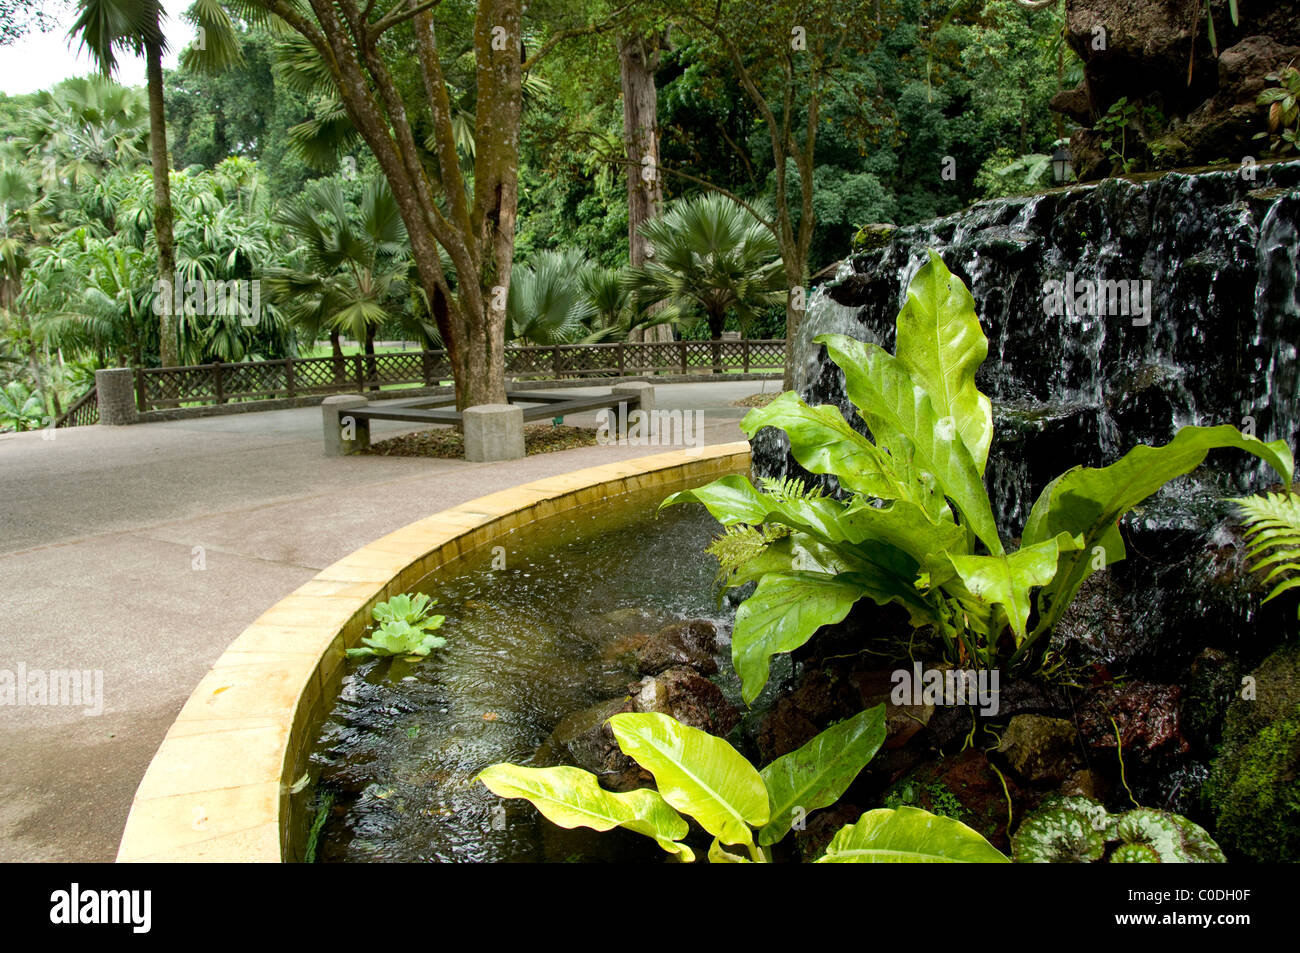 Asia Singapore Sanskrit For Lion City National Orchid Garden